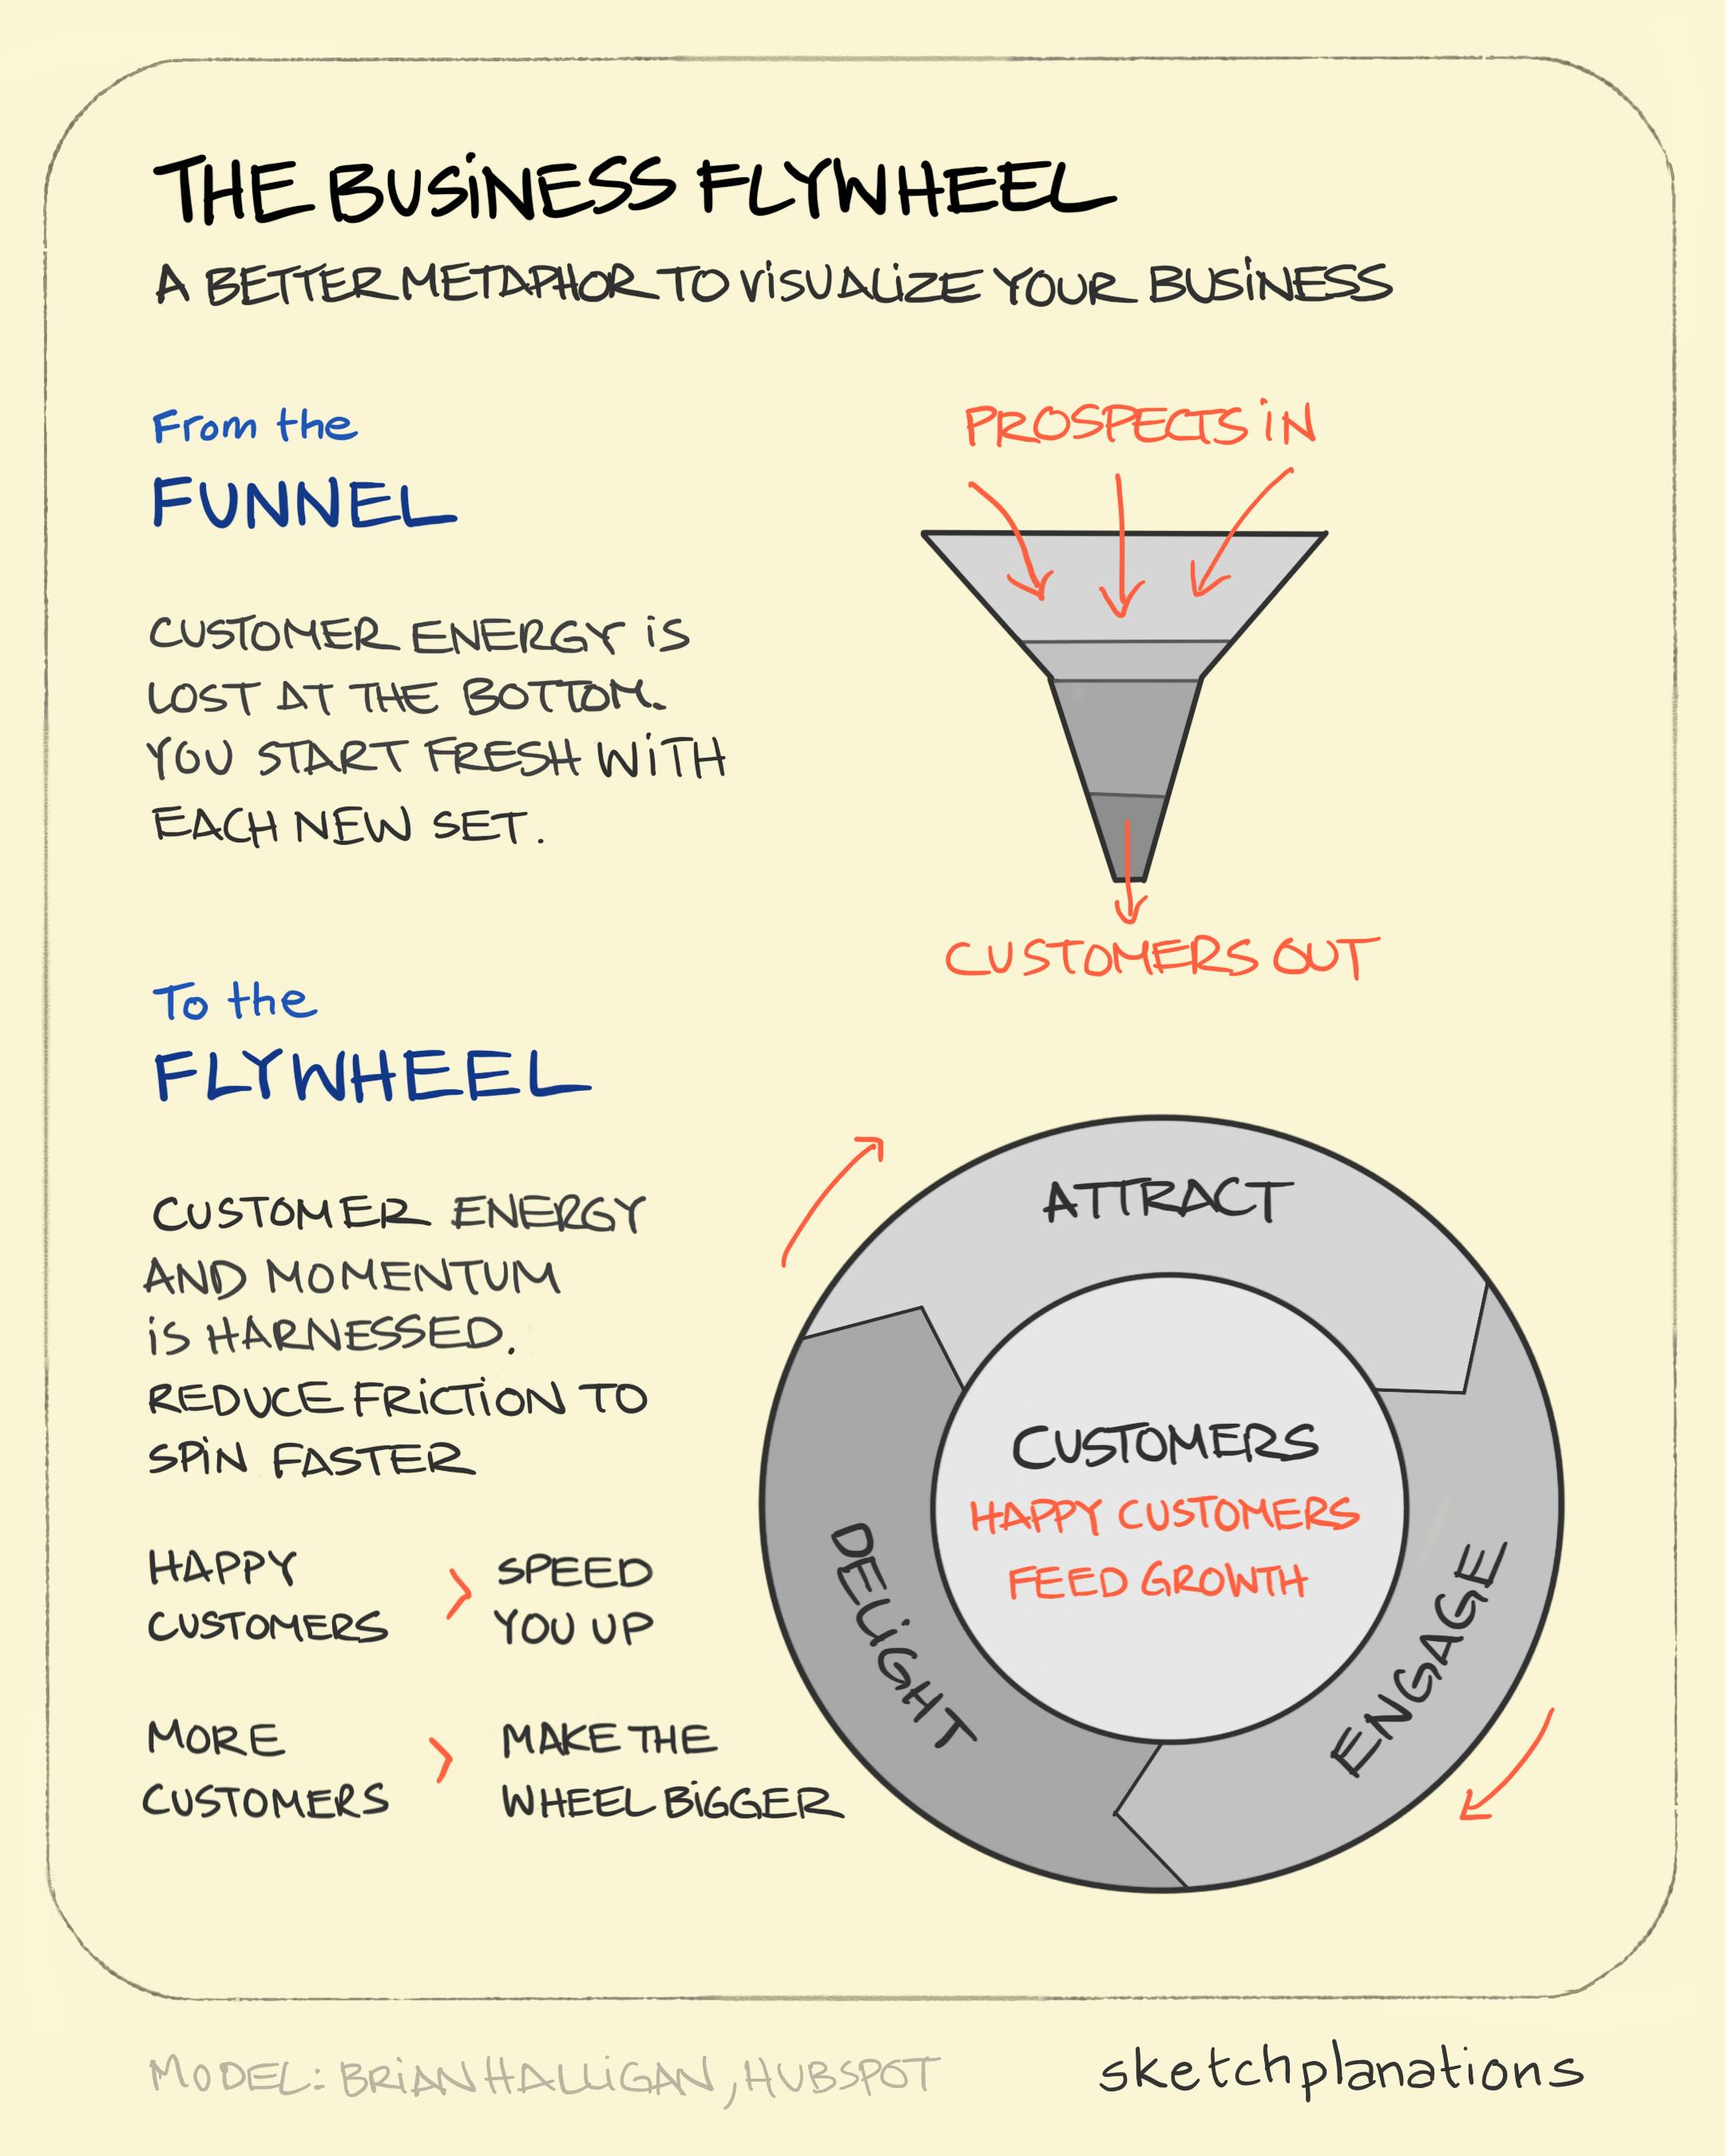 The business flywheel - Sketchplanations